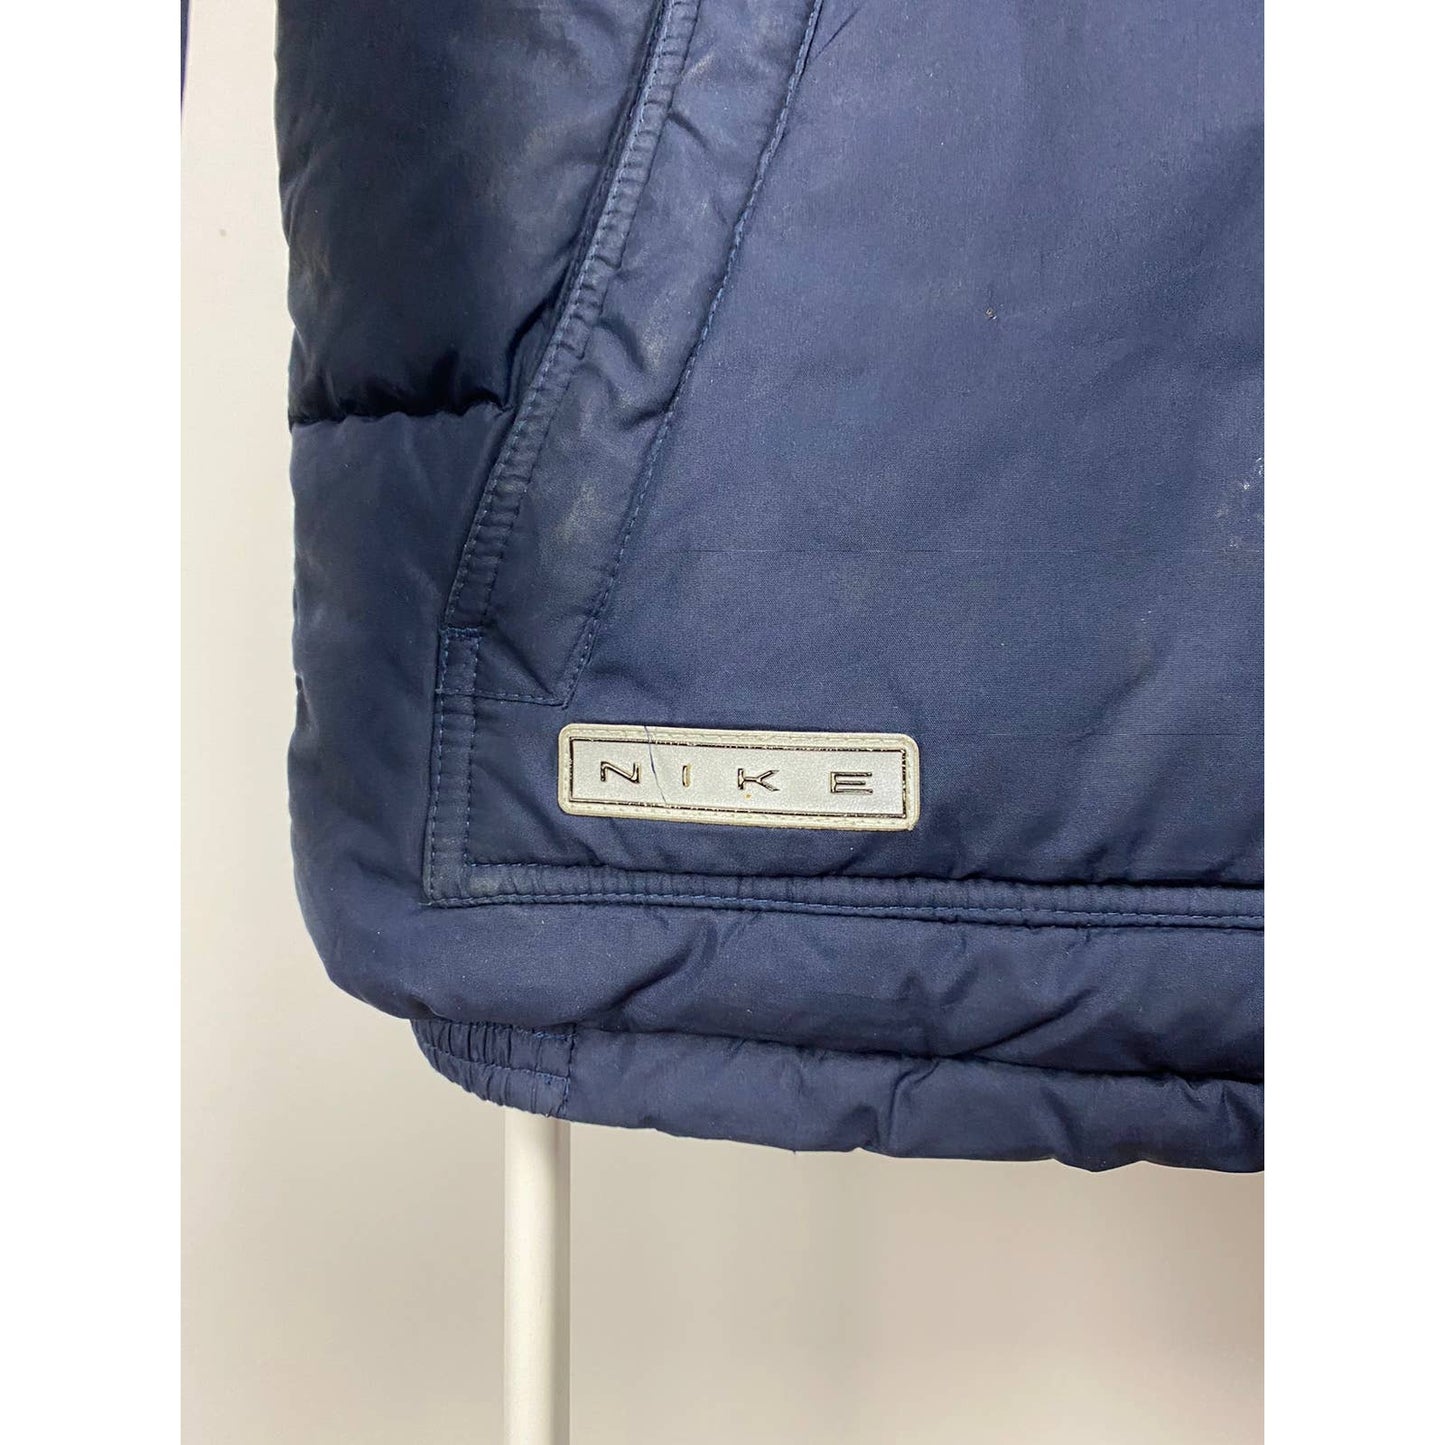 90s Nike vintage navy puffer jacket big swoosh baby blue